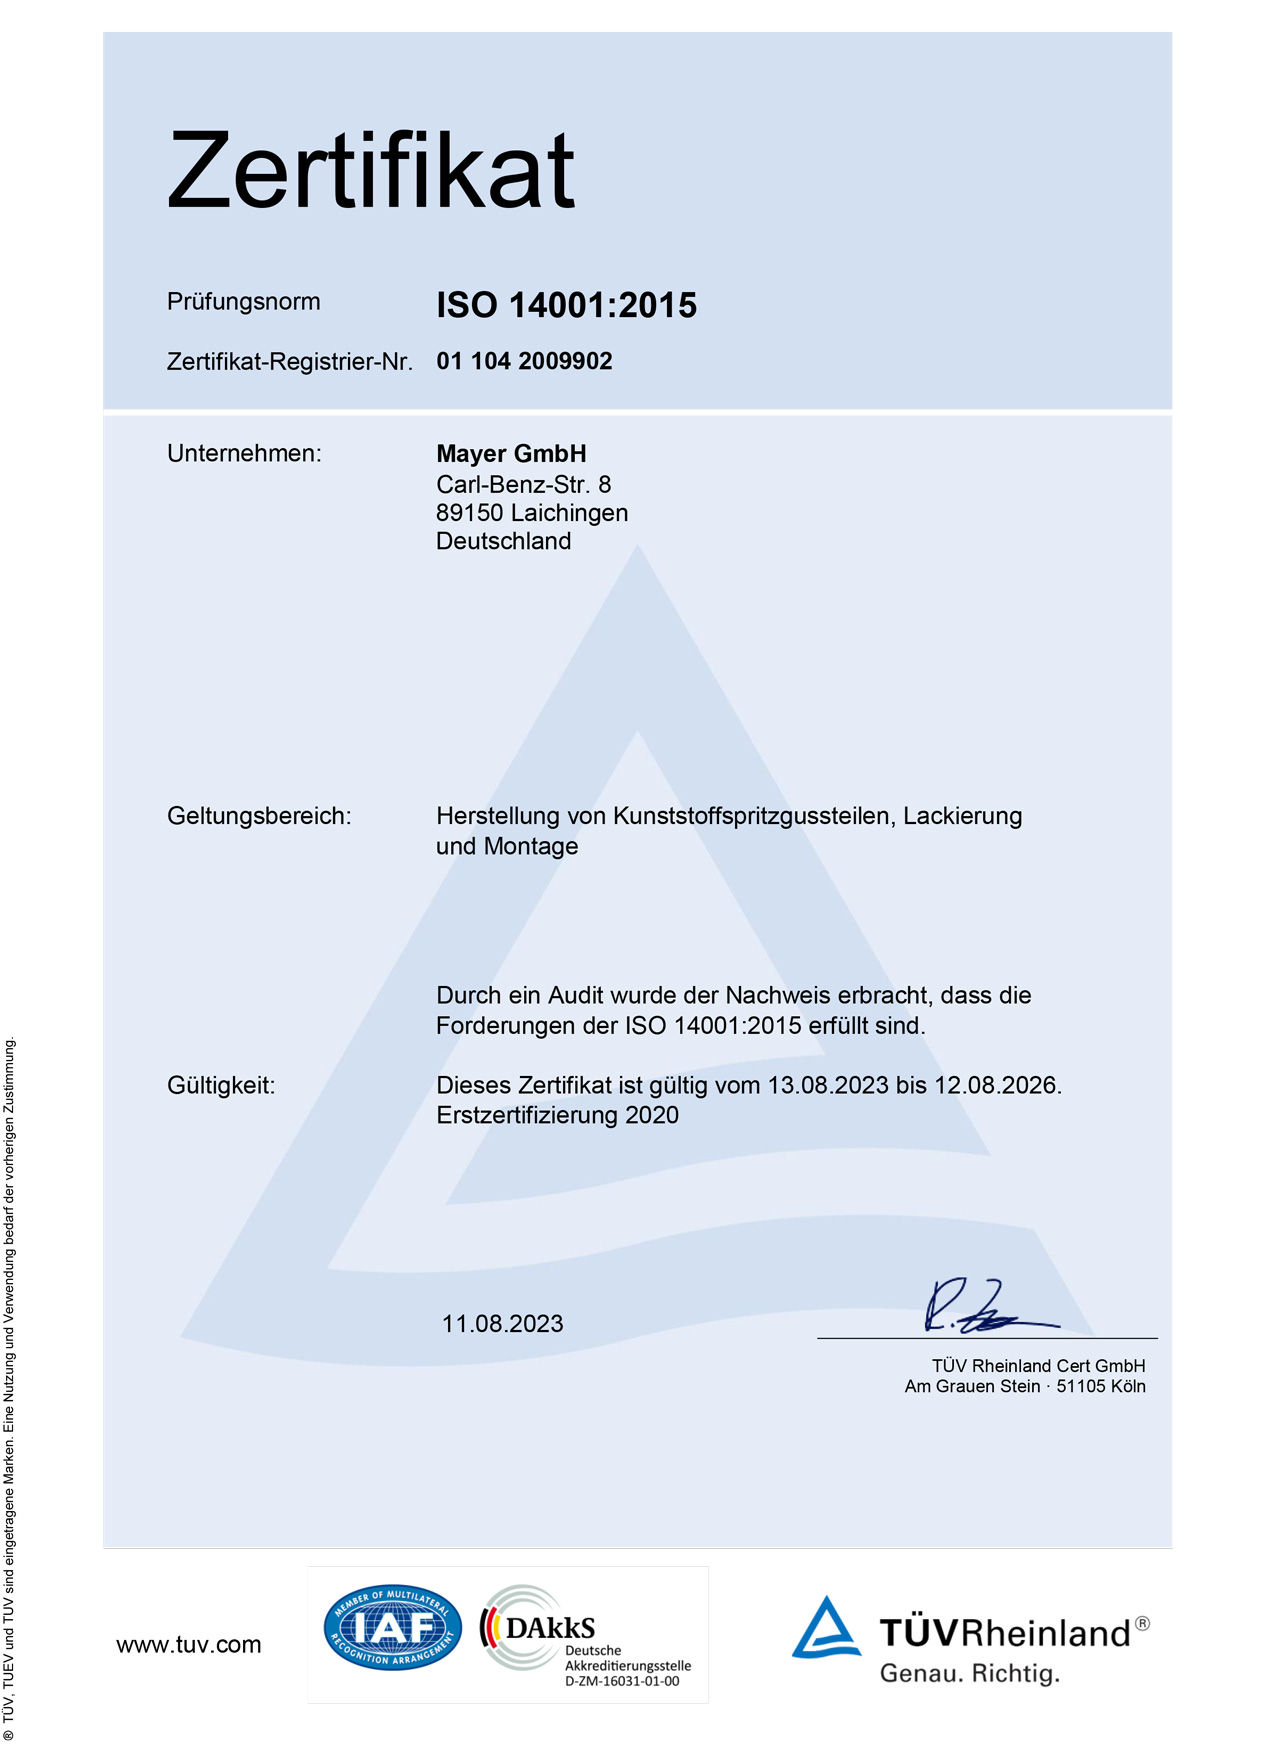 Mayer GmbH – Zertifikat ISO 14001:2015